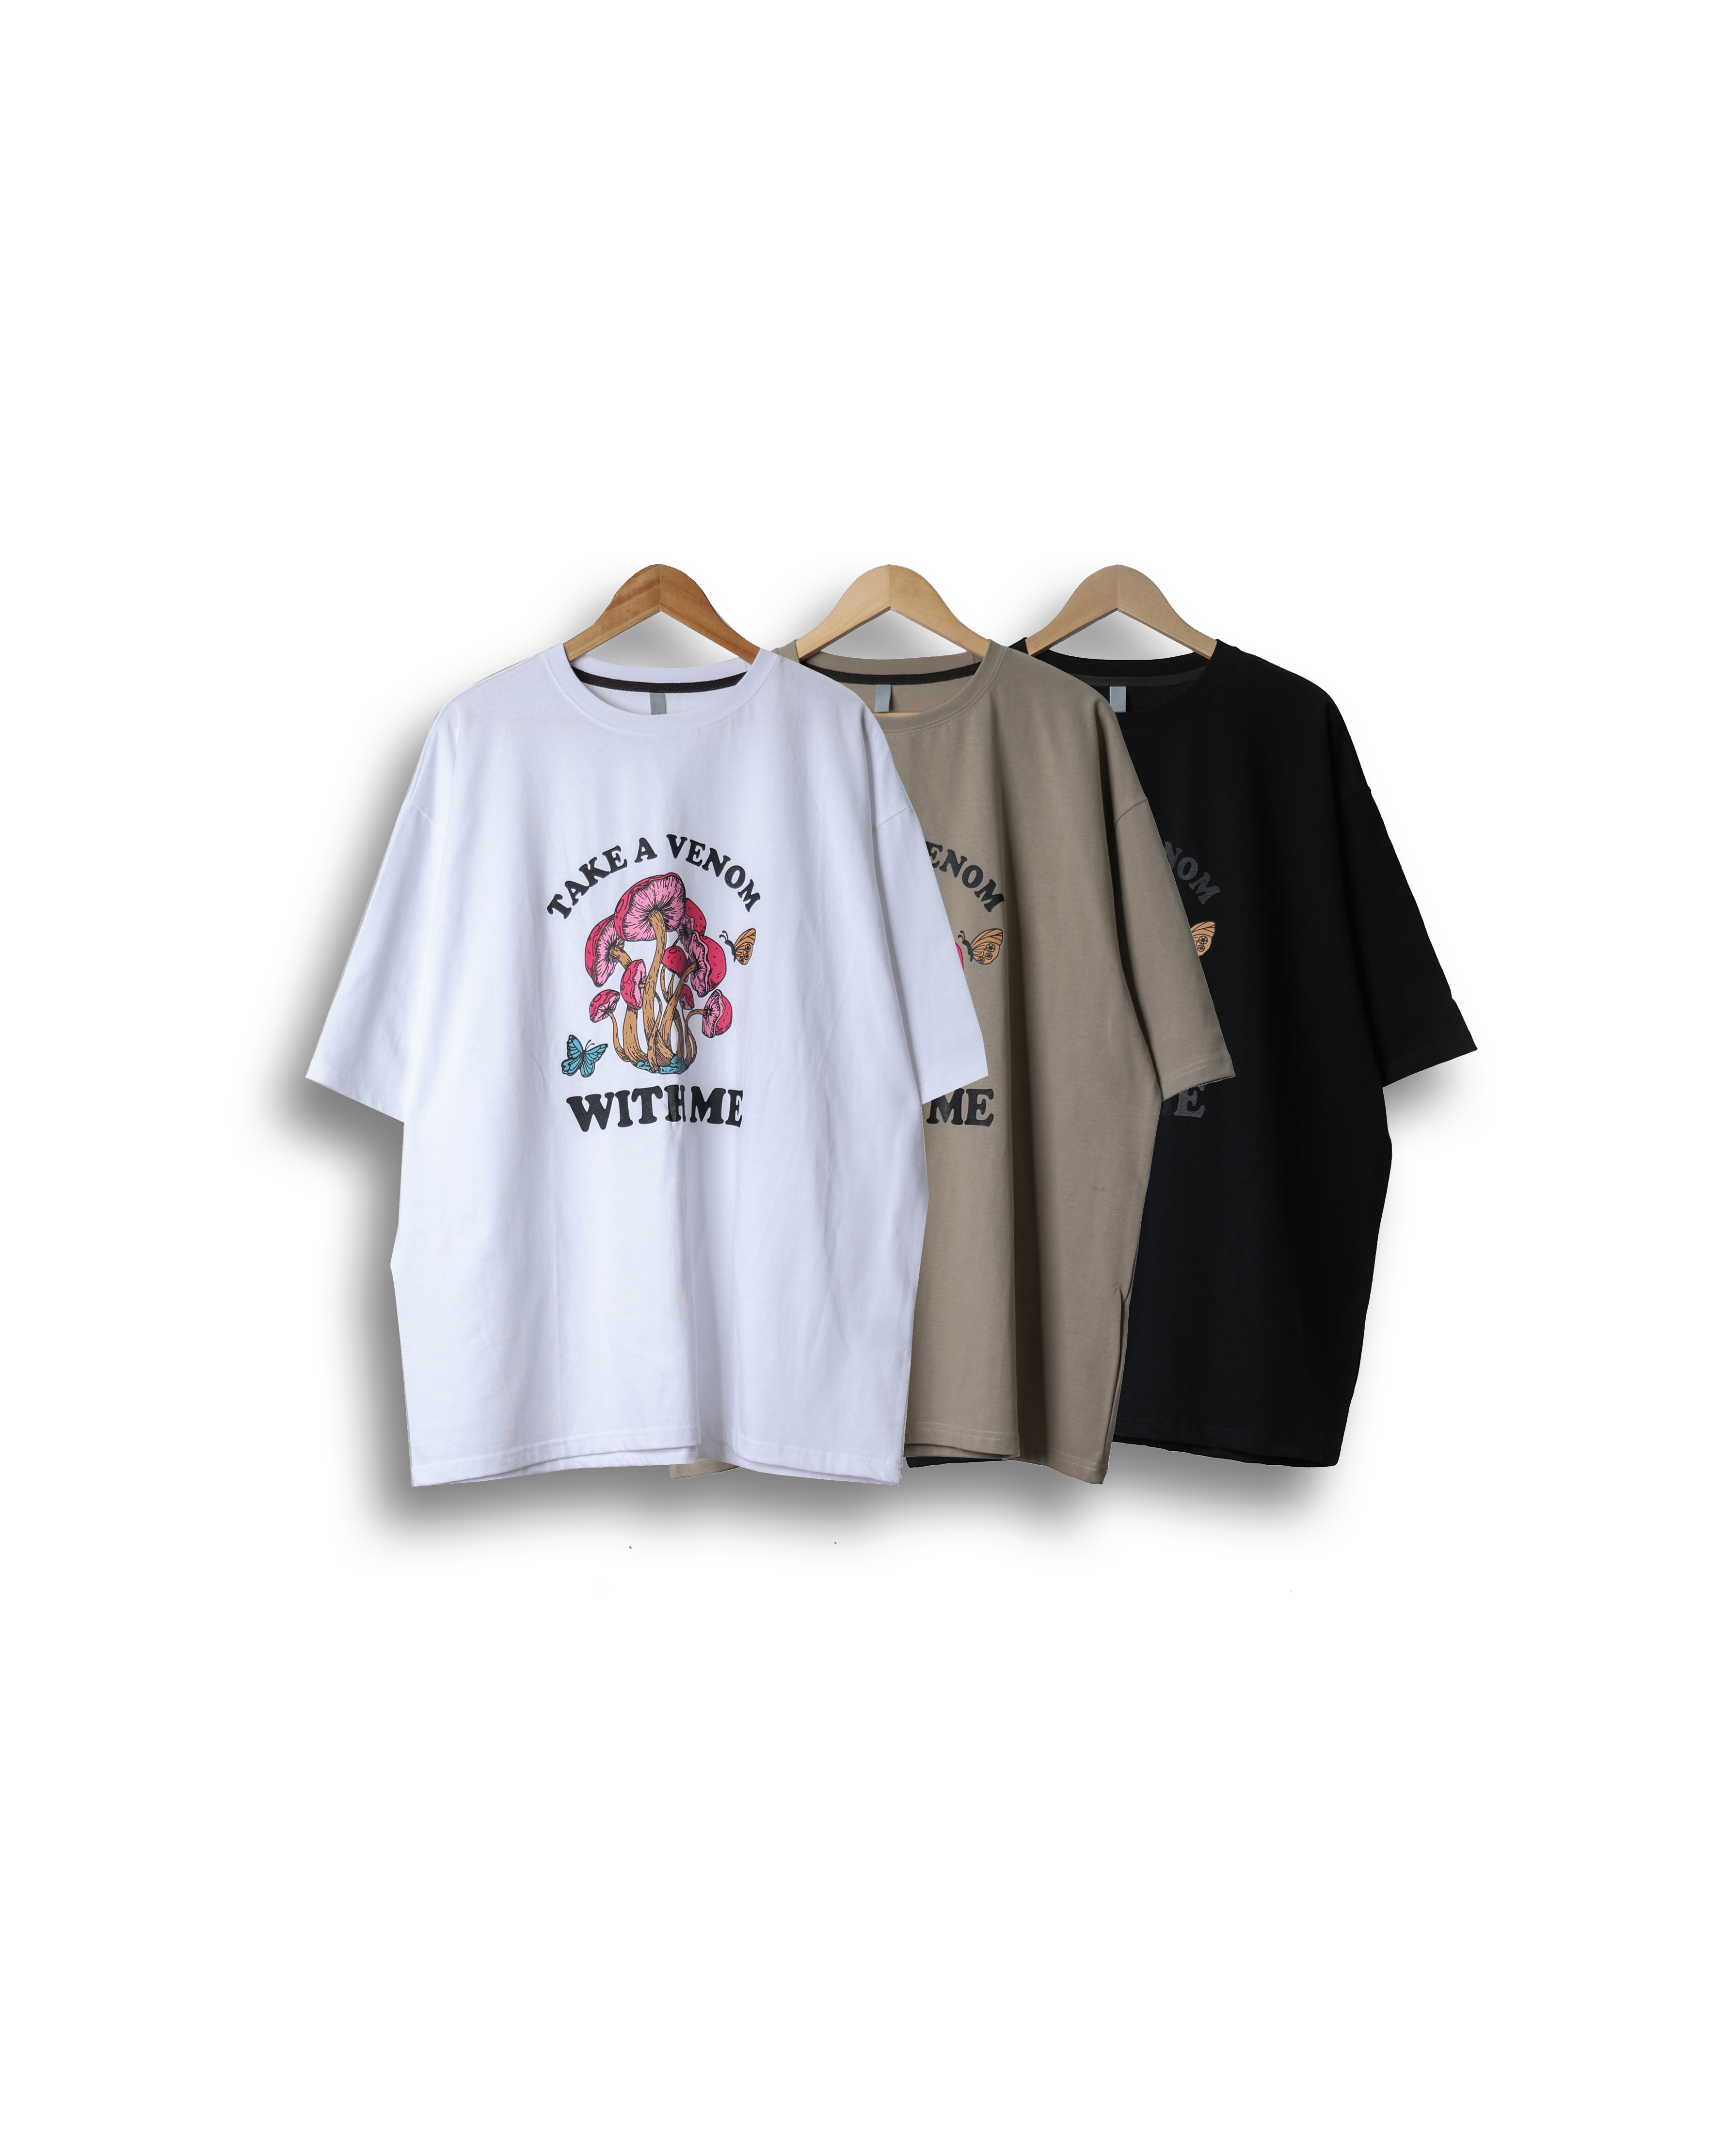 CONS VENOM WITHME Oversized T Shirts (Black/Beige/Ivory)